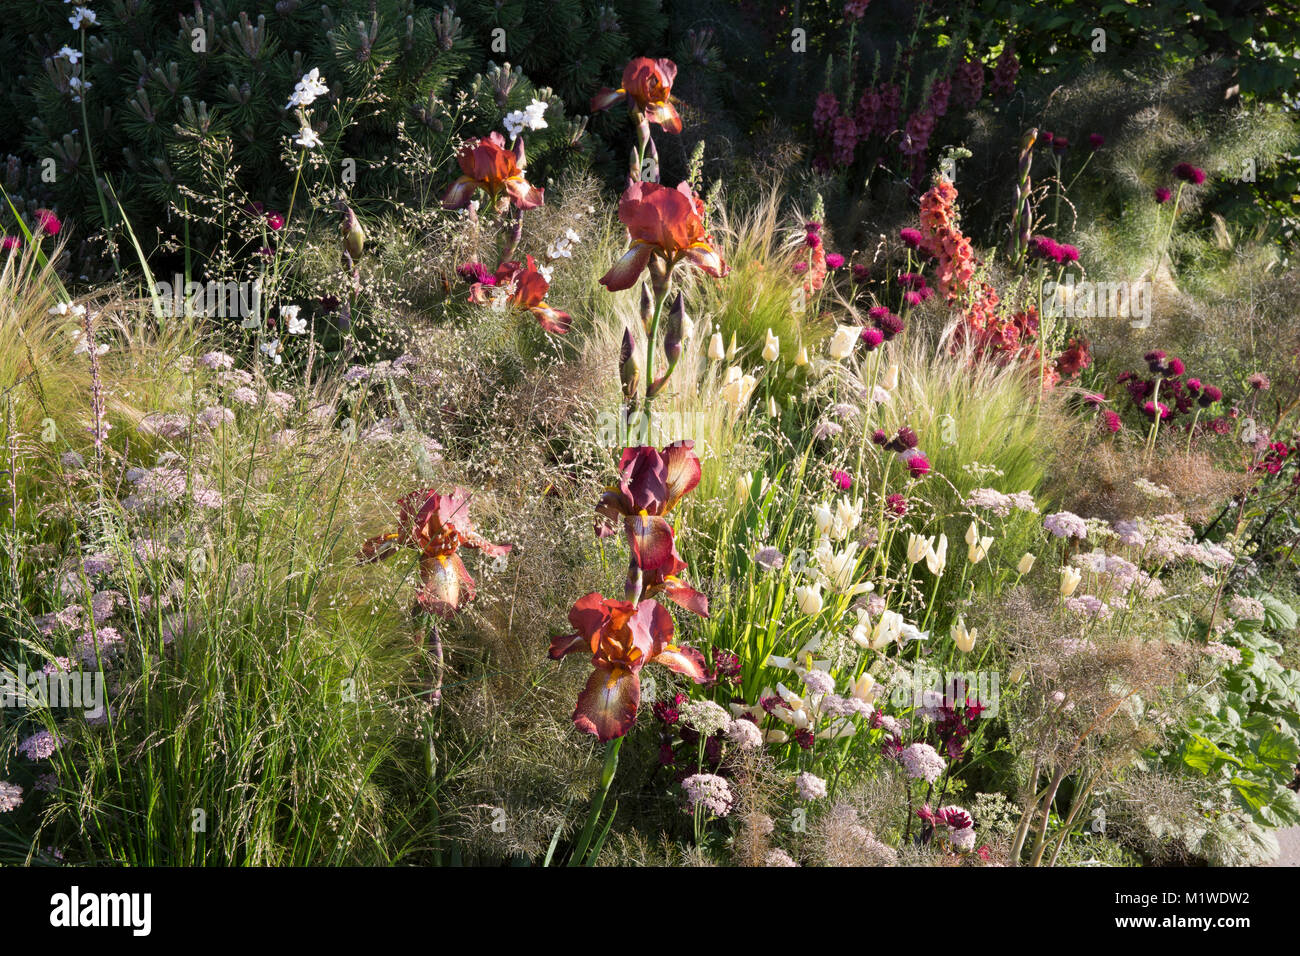 The BBC Radio 2 Jeremy Vine Texture Garden, RHS Chelsea Flower Show 2017 flower garden border with ornamental grass grasses UK Iris Kent Pride Stock Photo